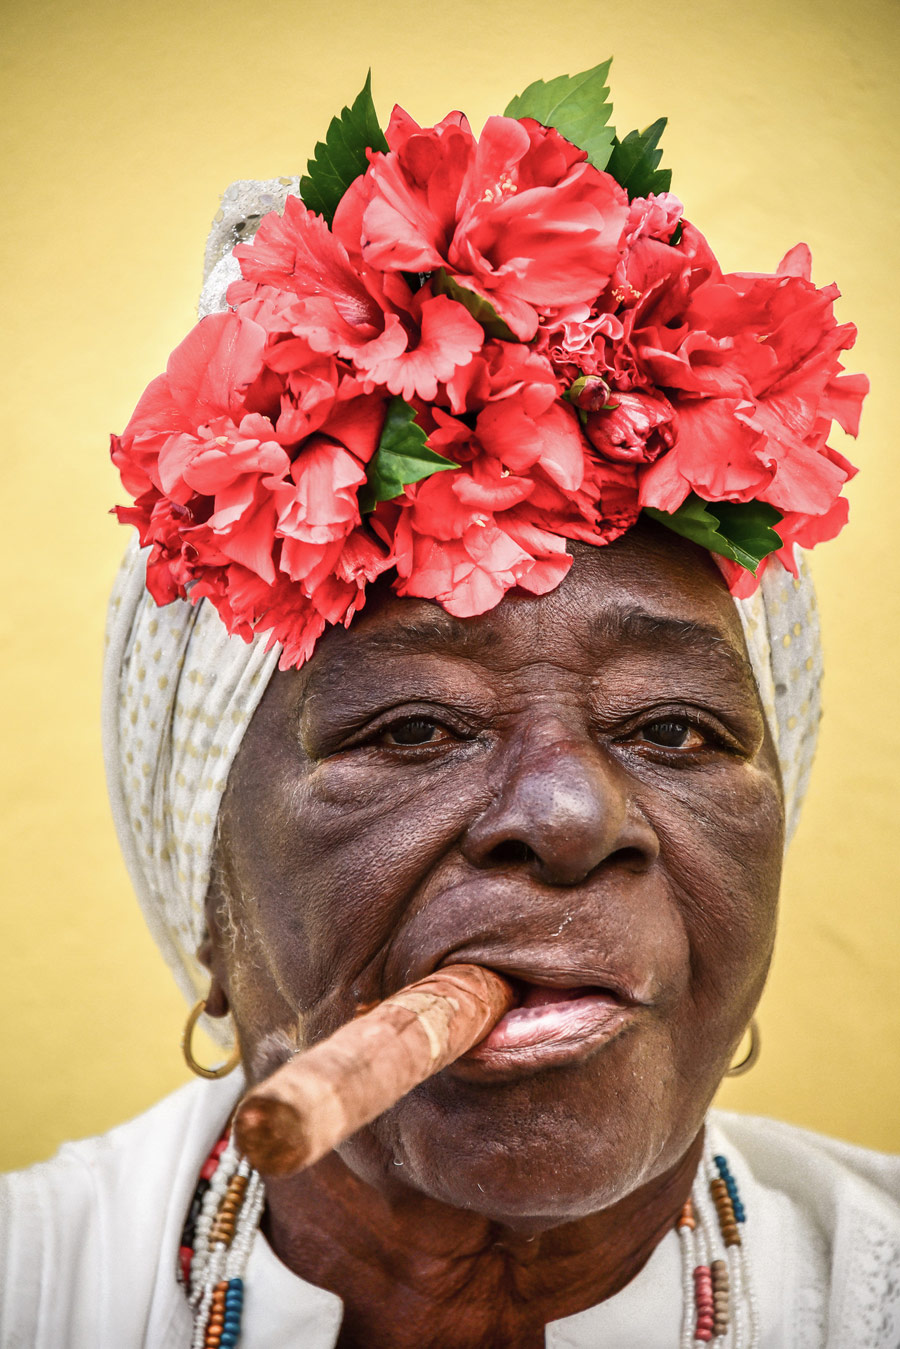 Beauty Of Human Race, © Biljana Jurukovski, Casula, NSW, Australia, Amateur : Photo Essay, World In Focus - The Ultimate Travel Photography Competition